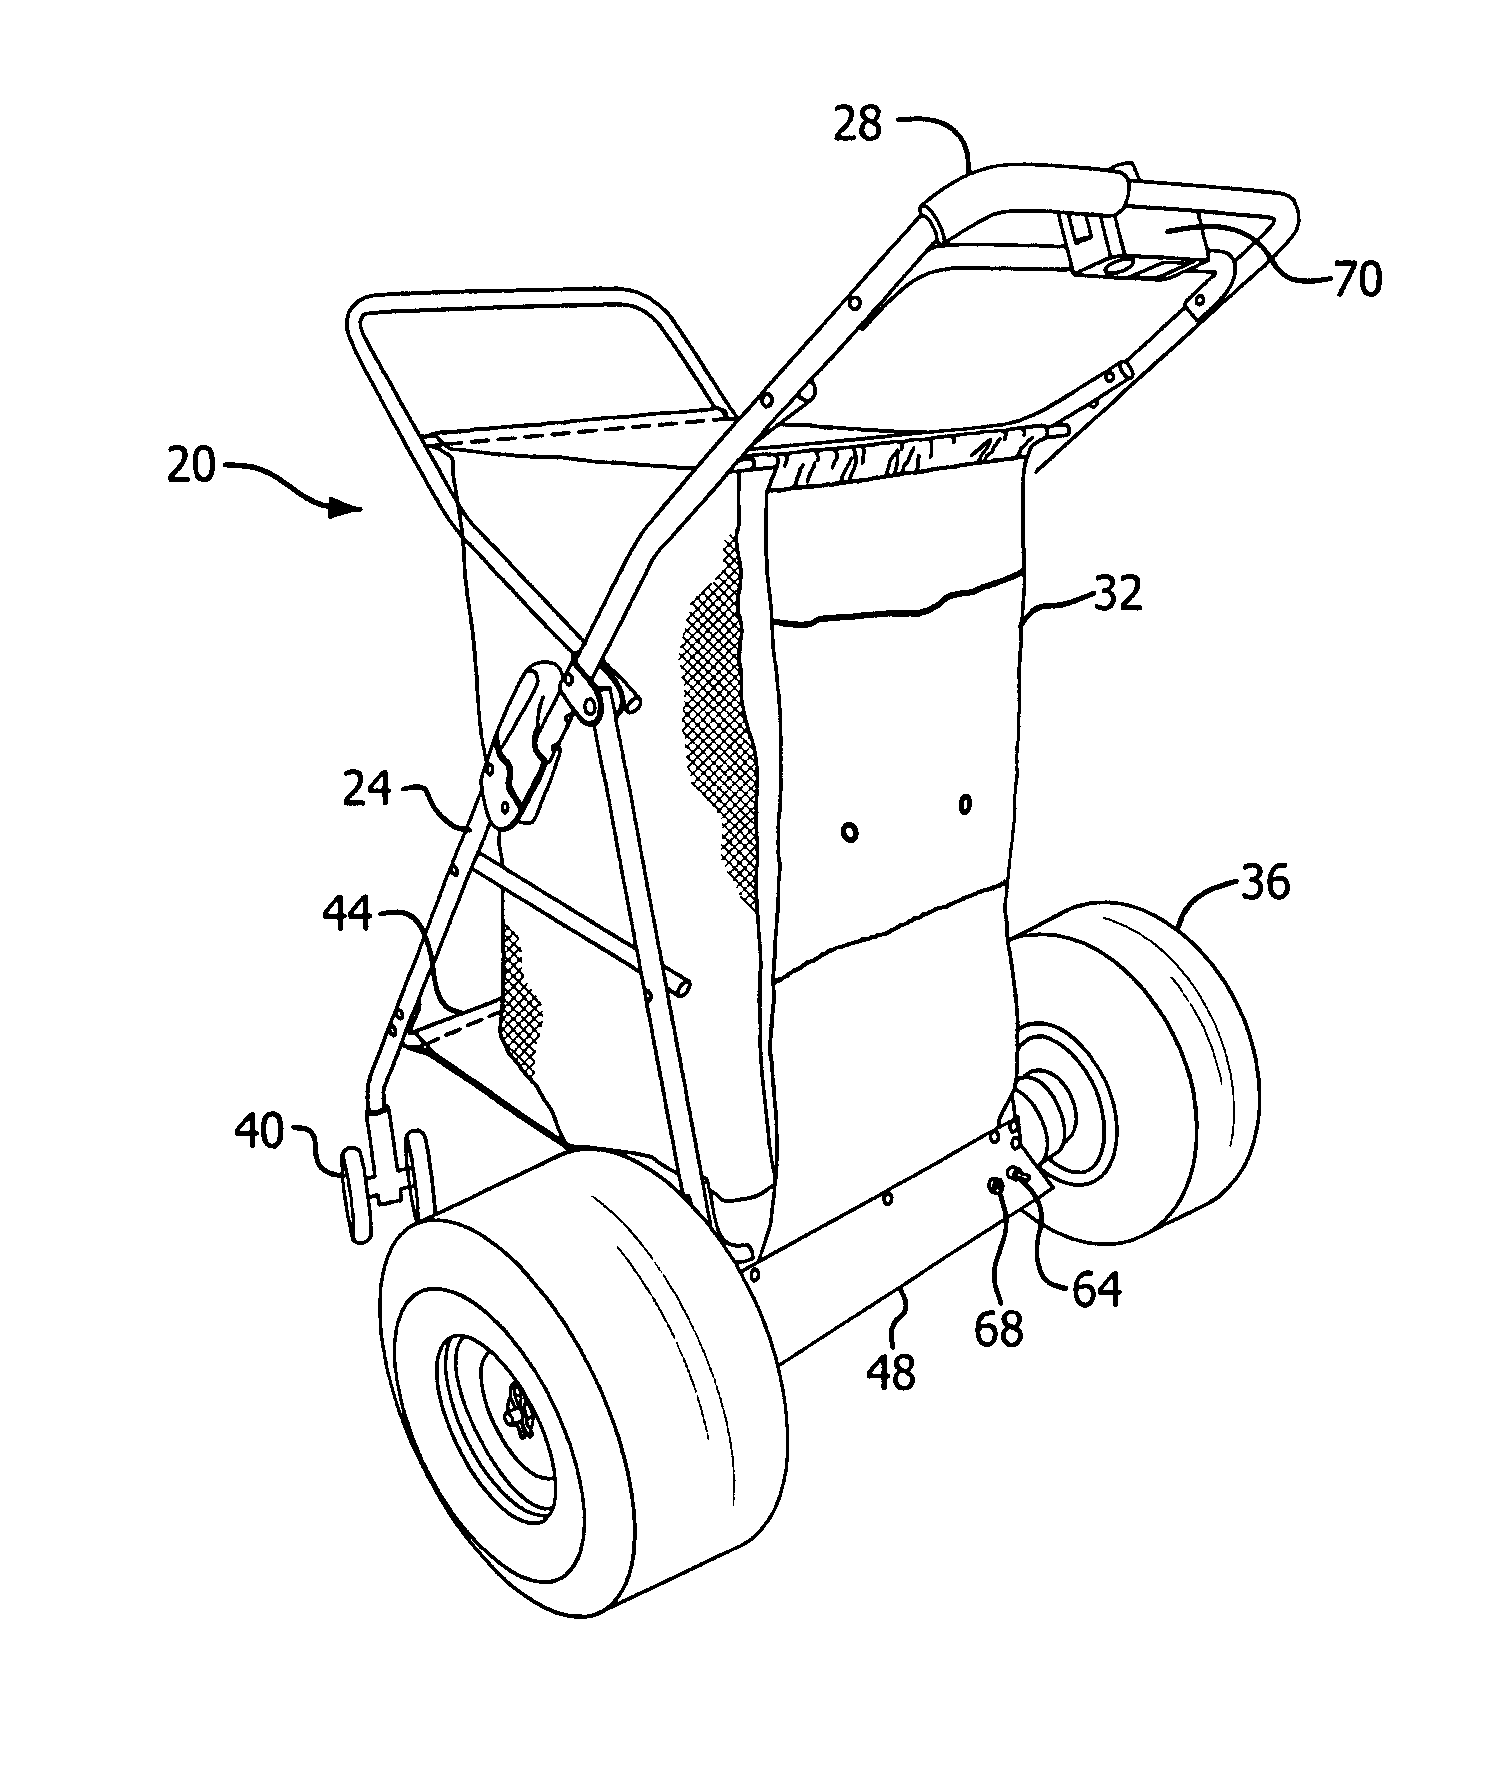 Motorized beach cart